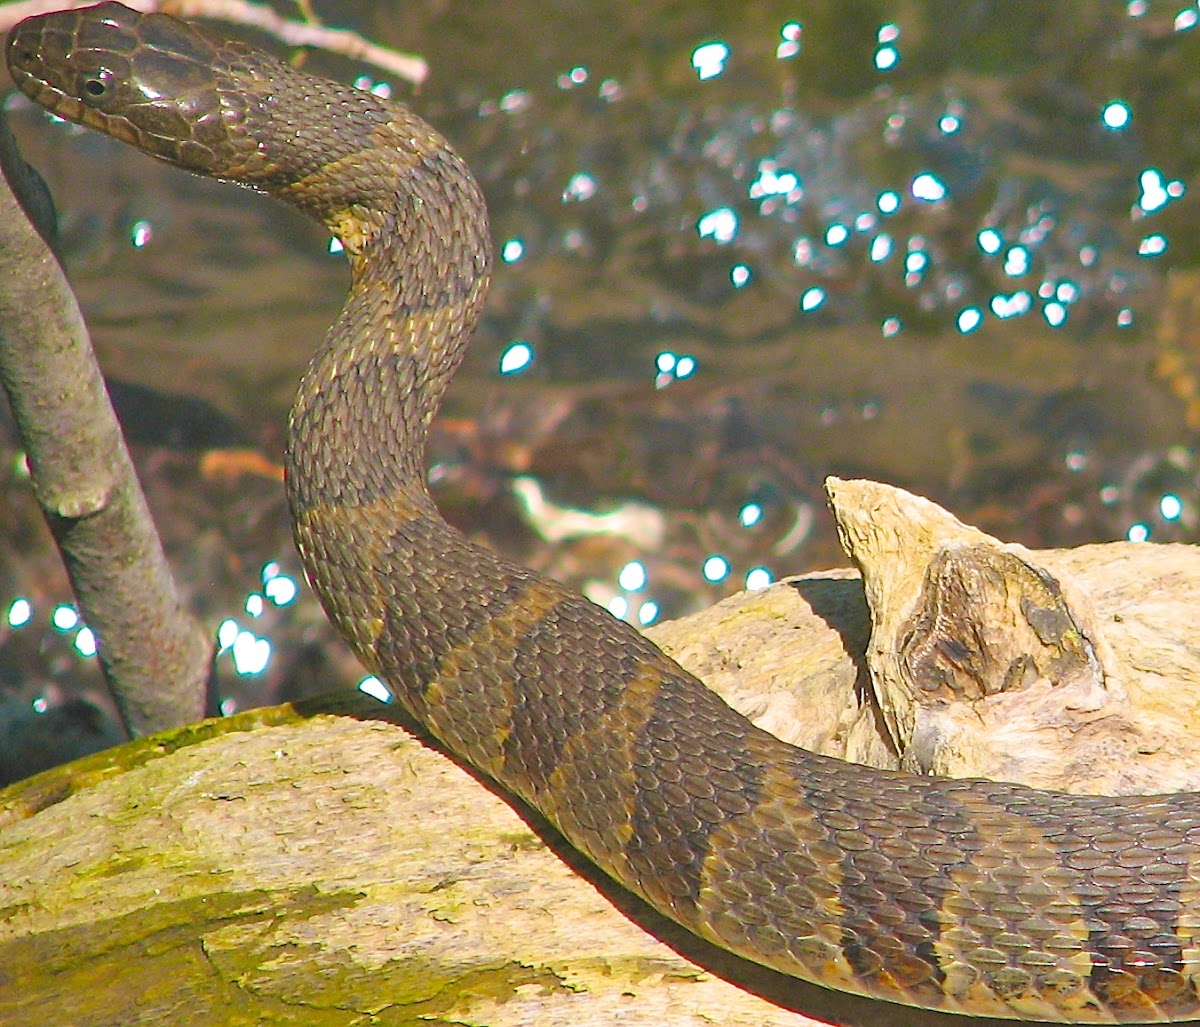 Midland water snake